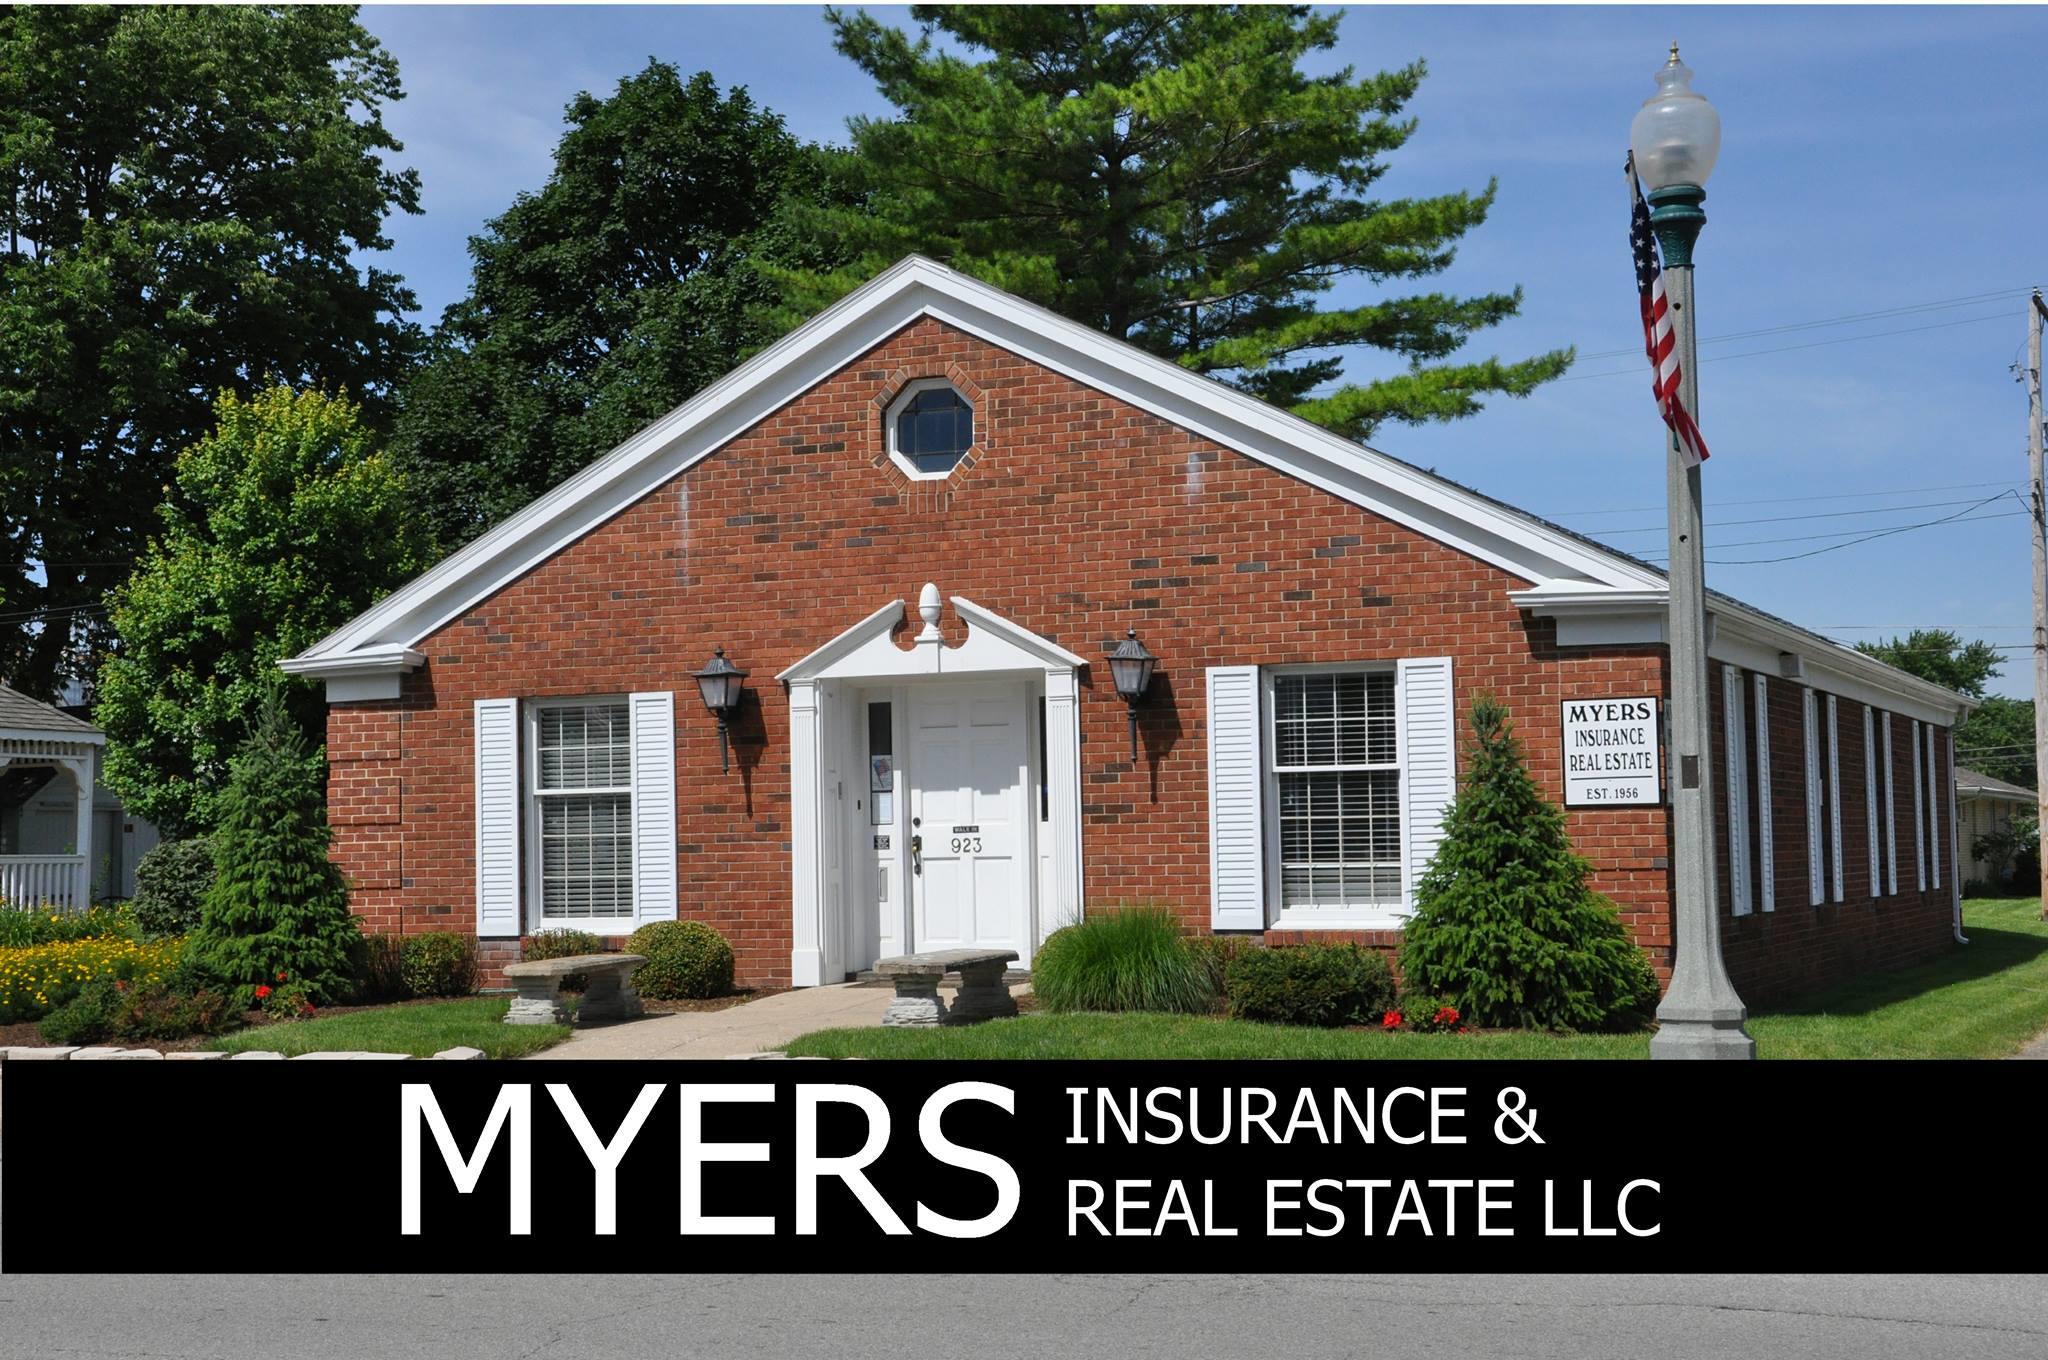 Myers Insurance & Real Estate, LLC Lapel (765)534-3154